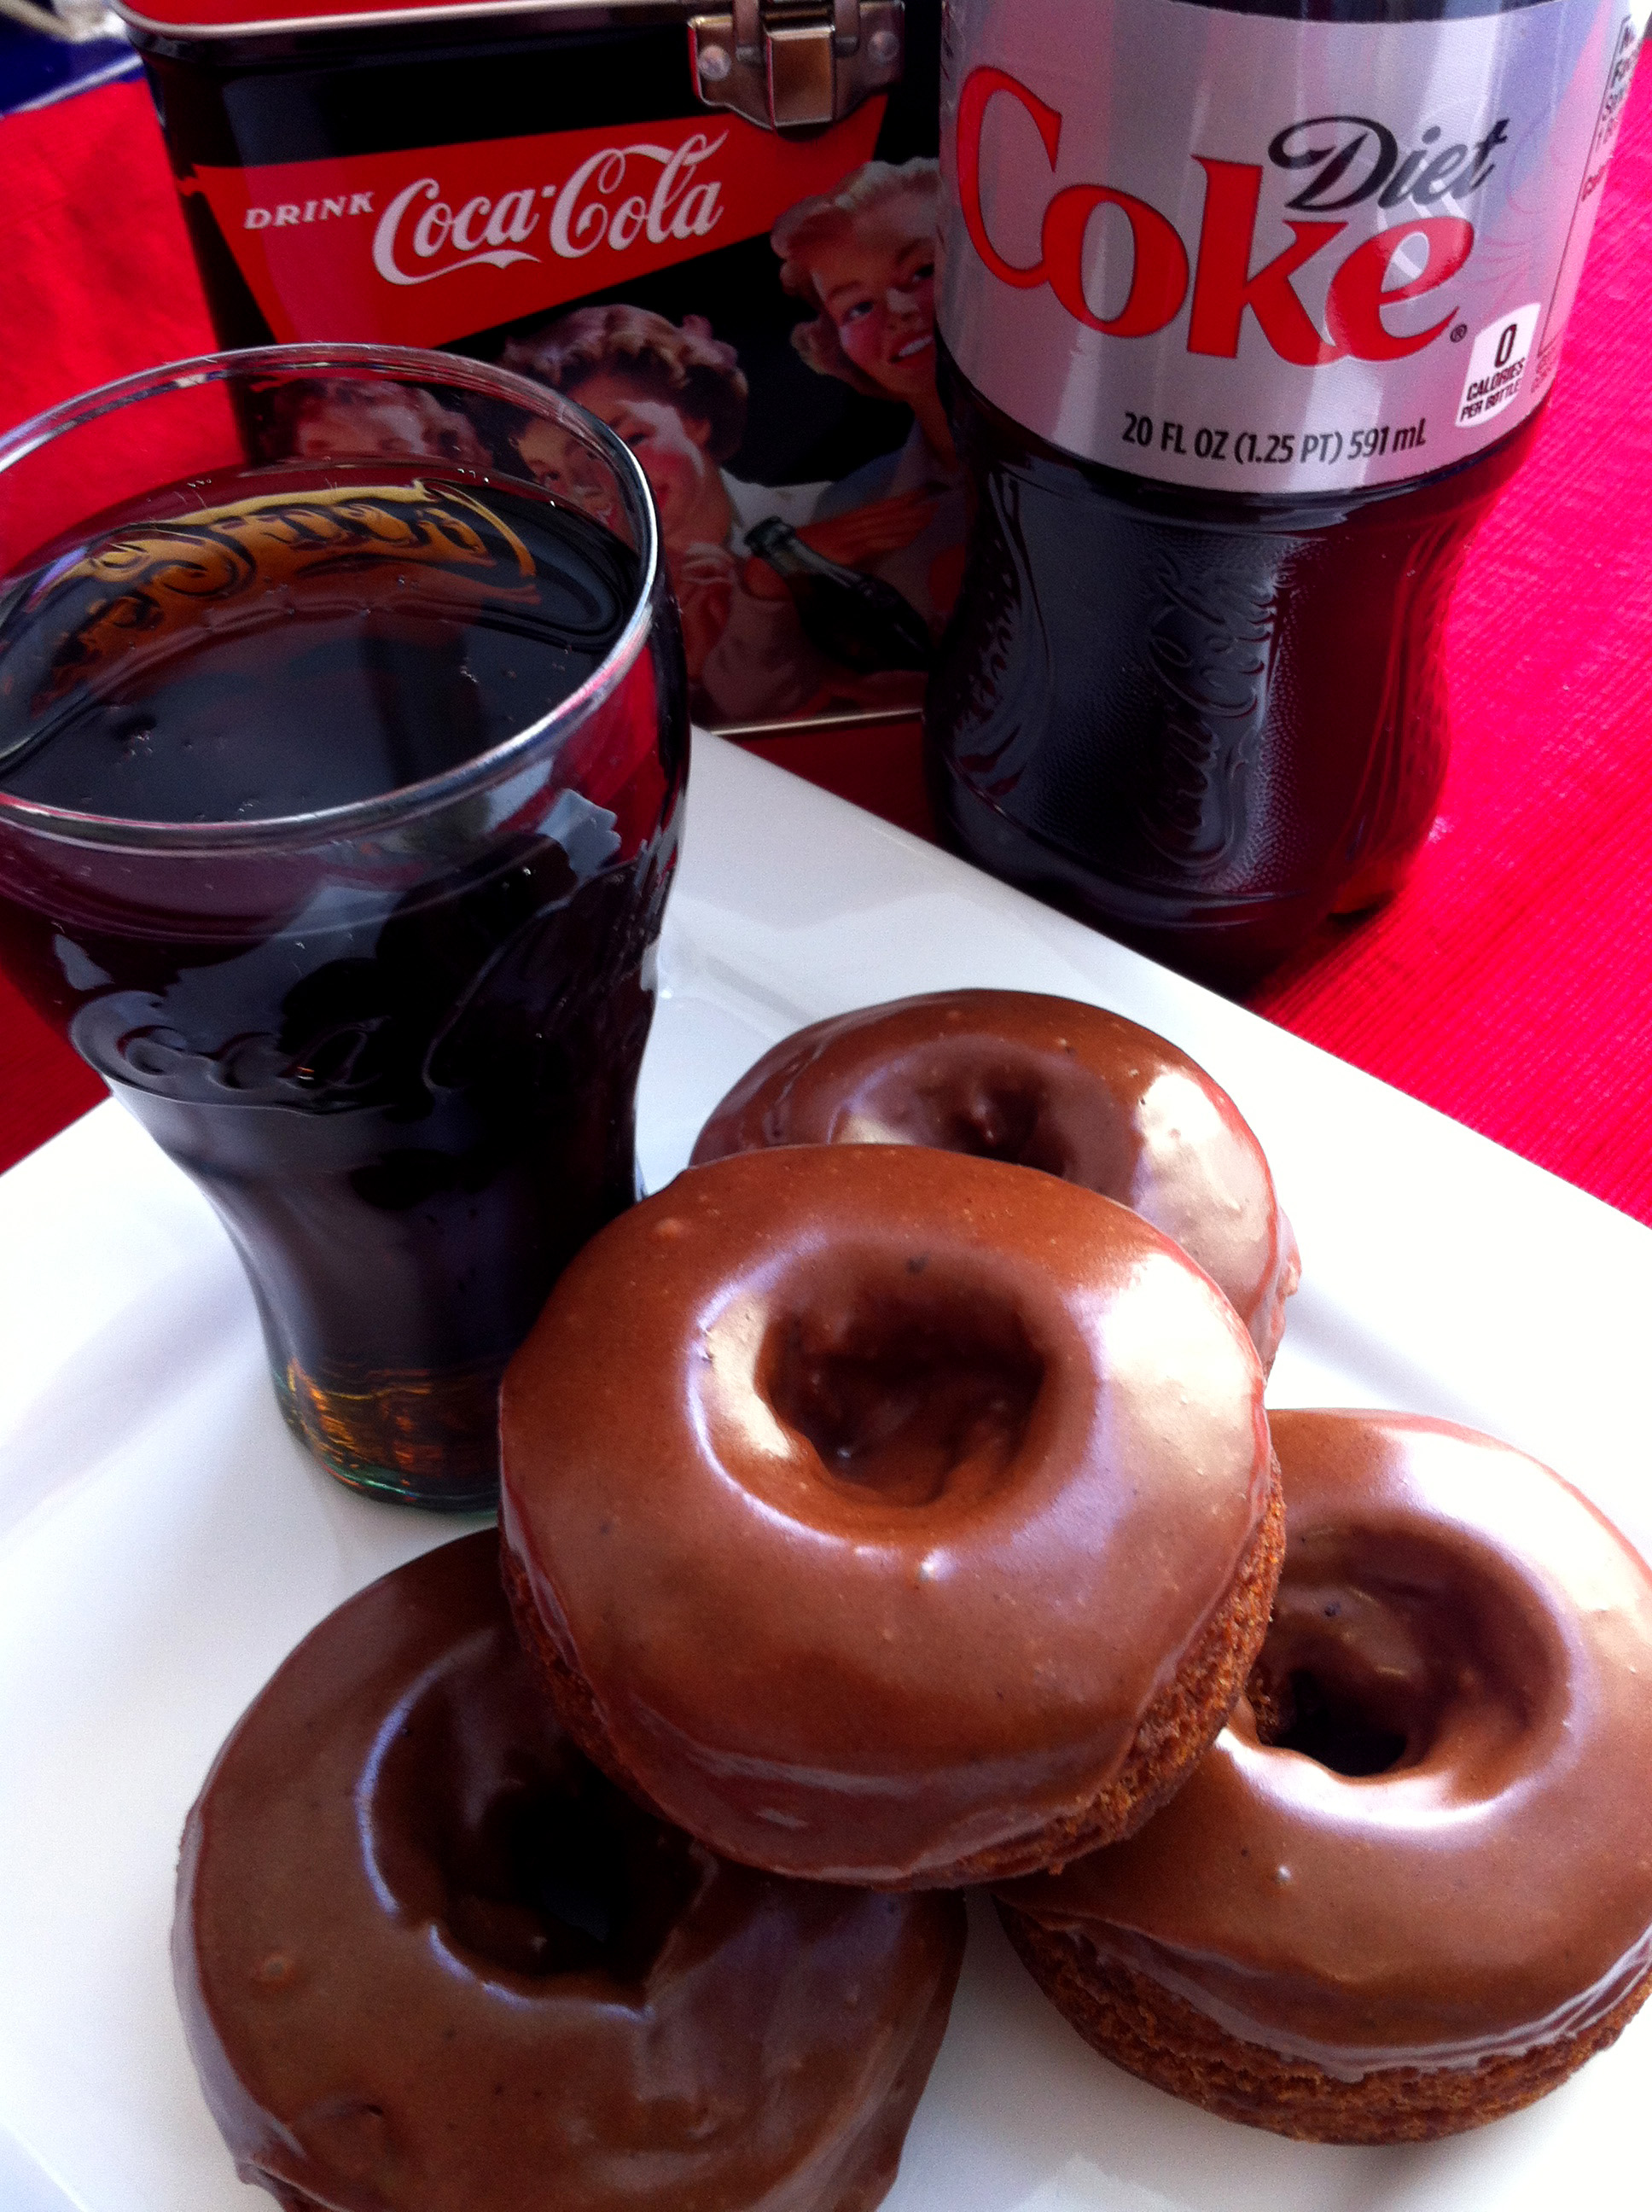 Diet Coke Chocolate Doughnuts